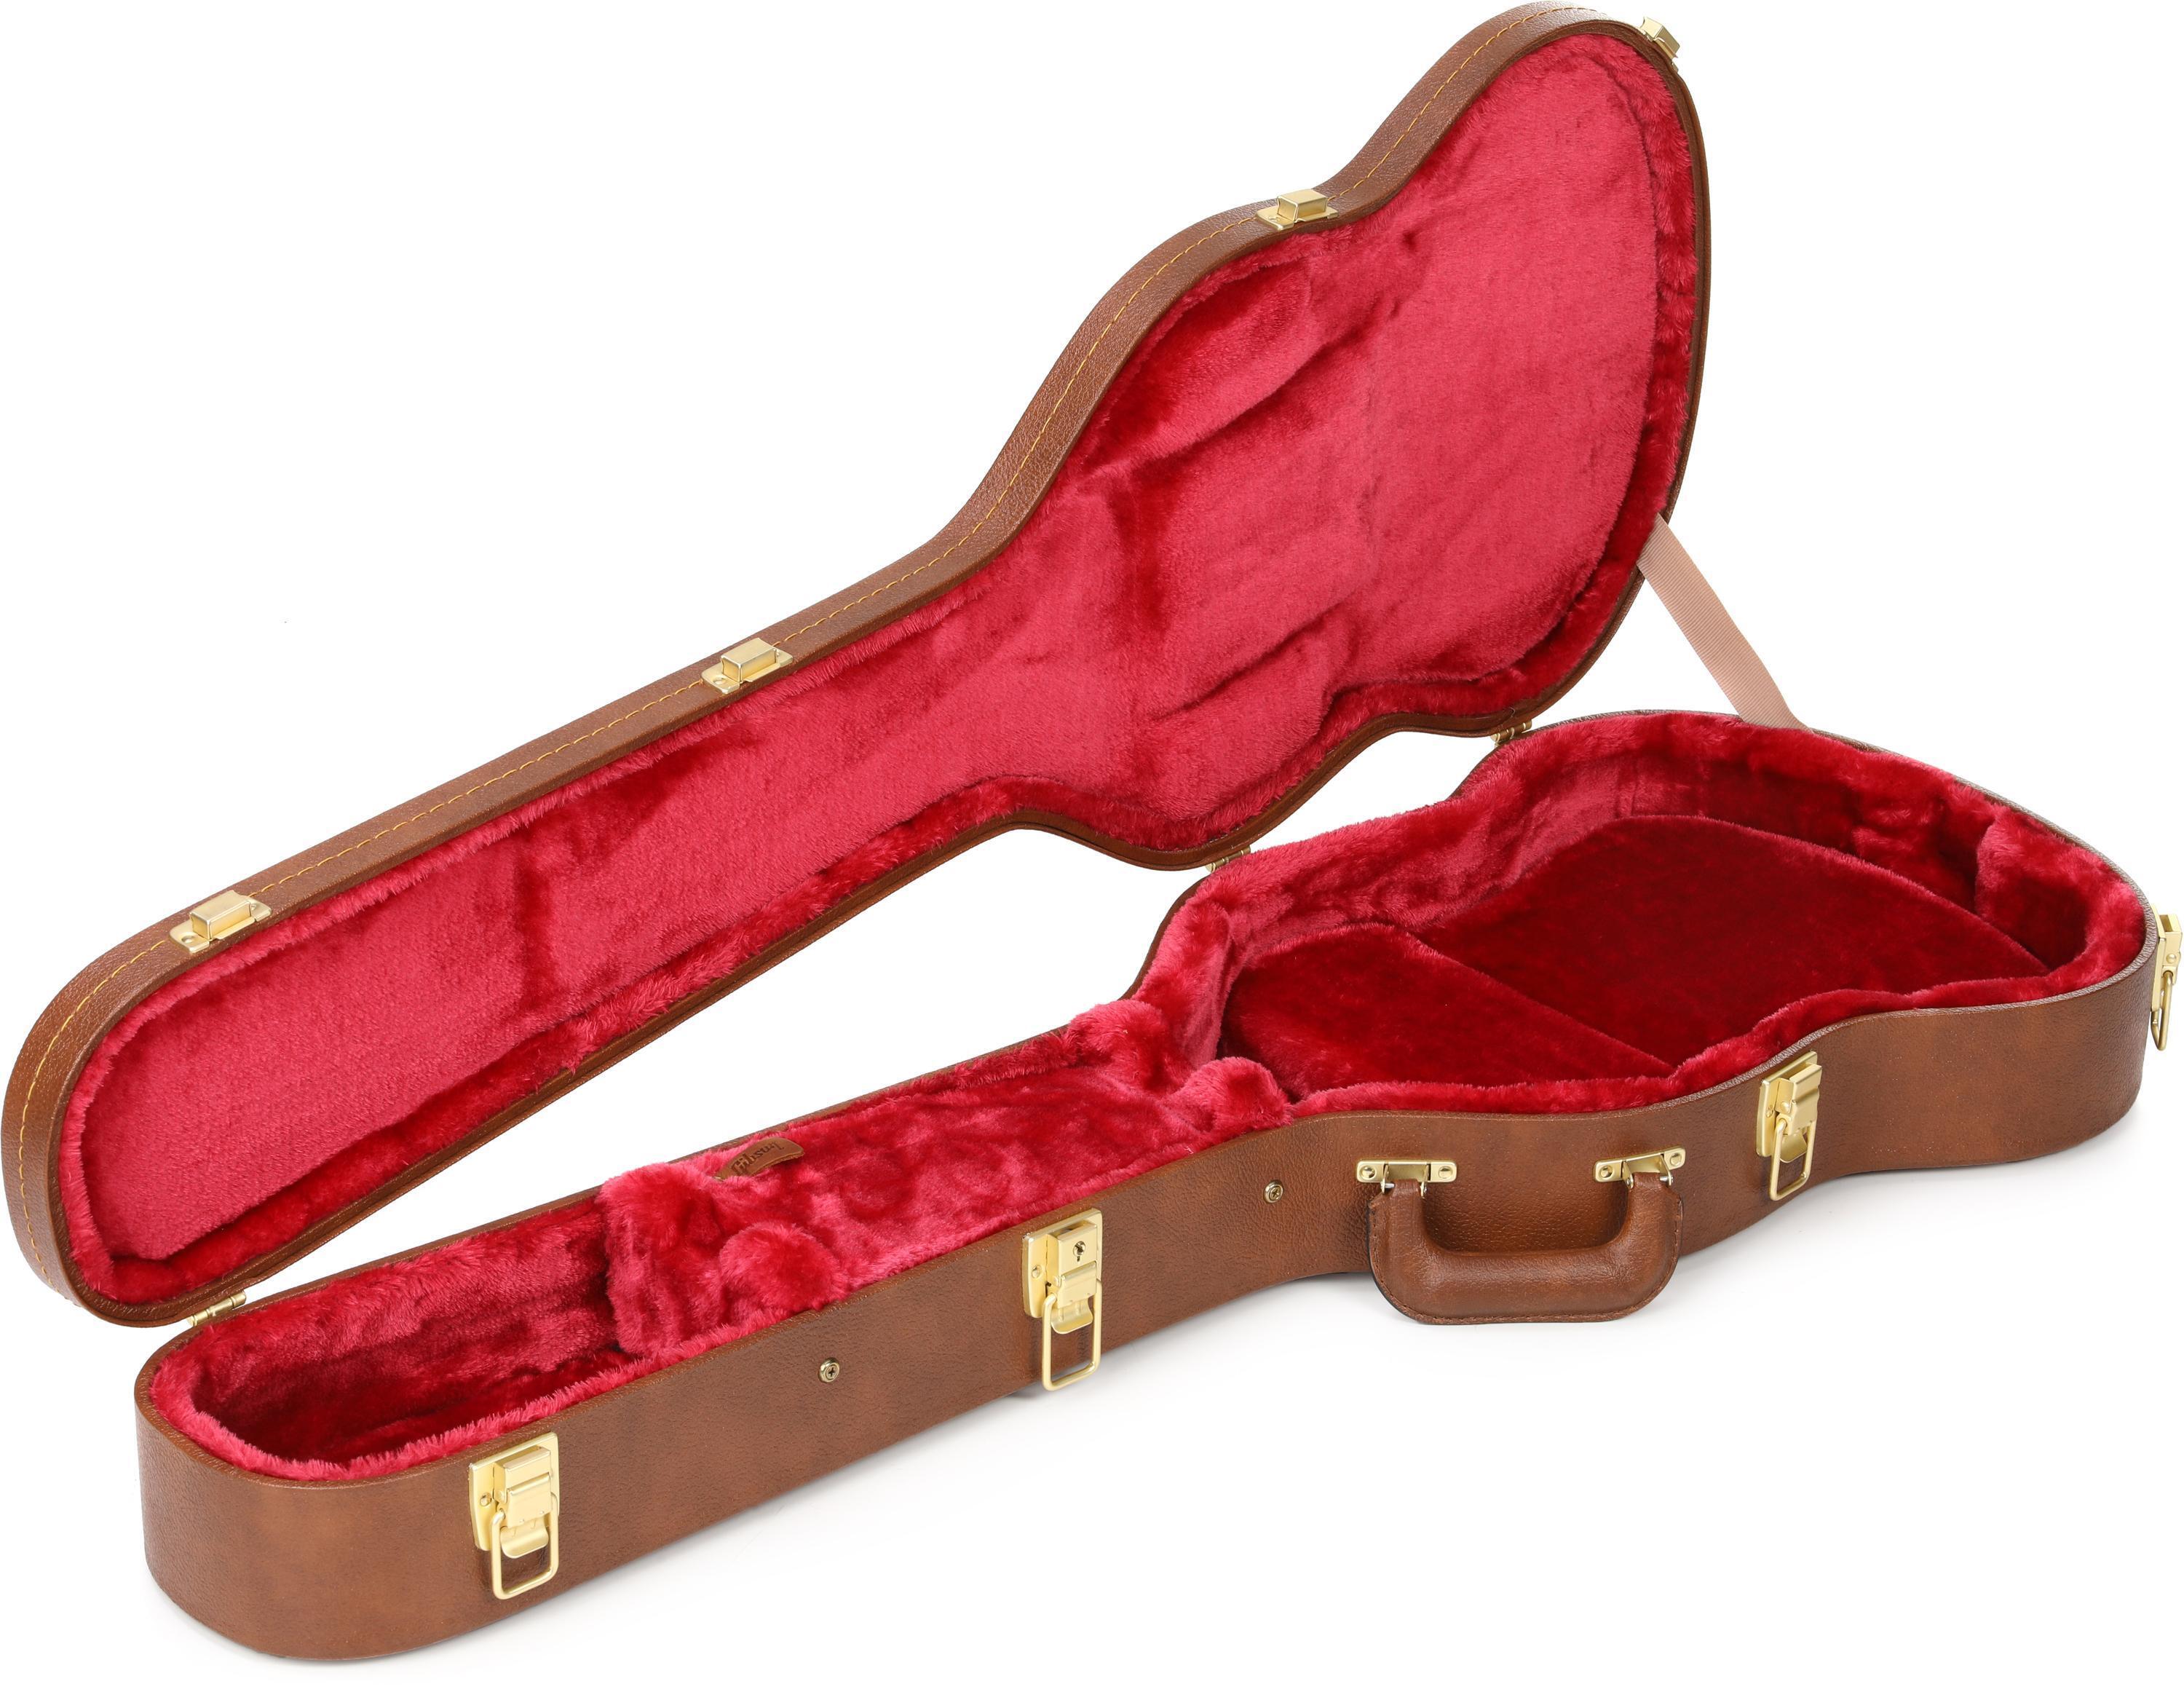 Gibson Accessories SG Original Hardshell Case - Brown